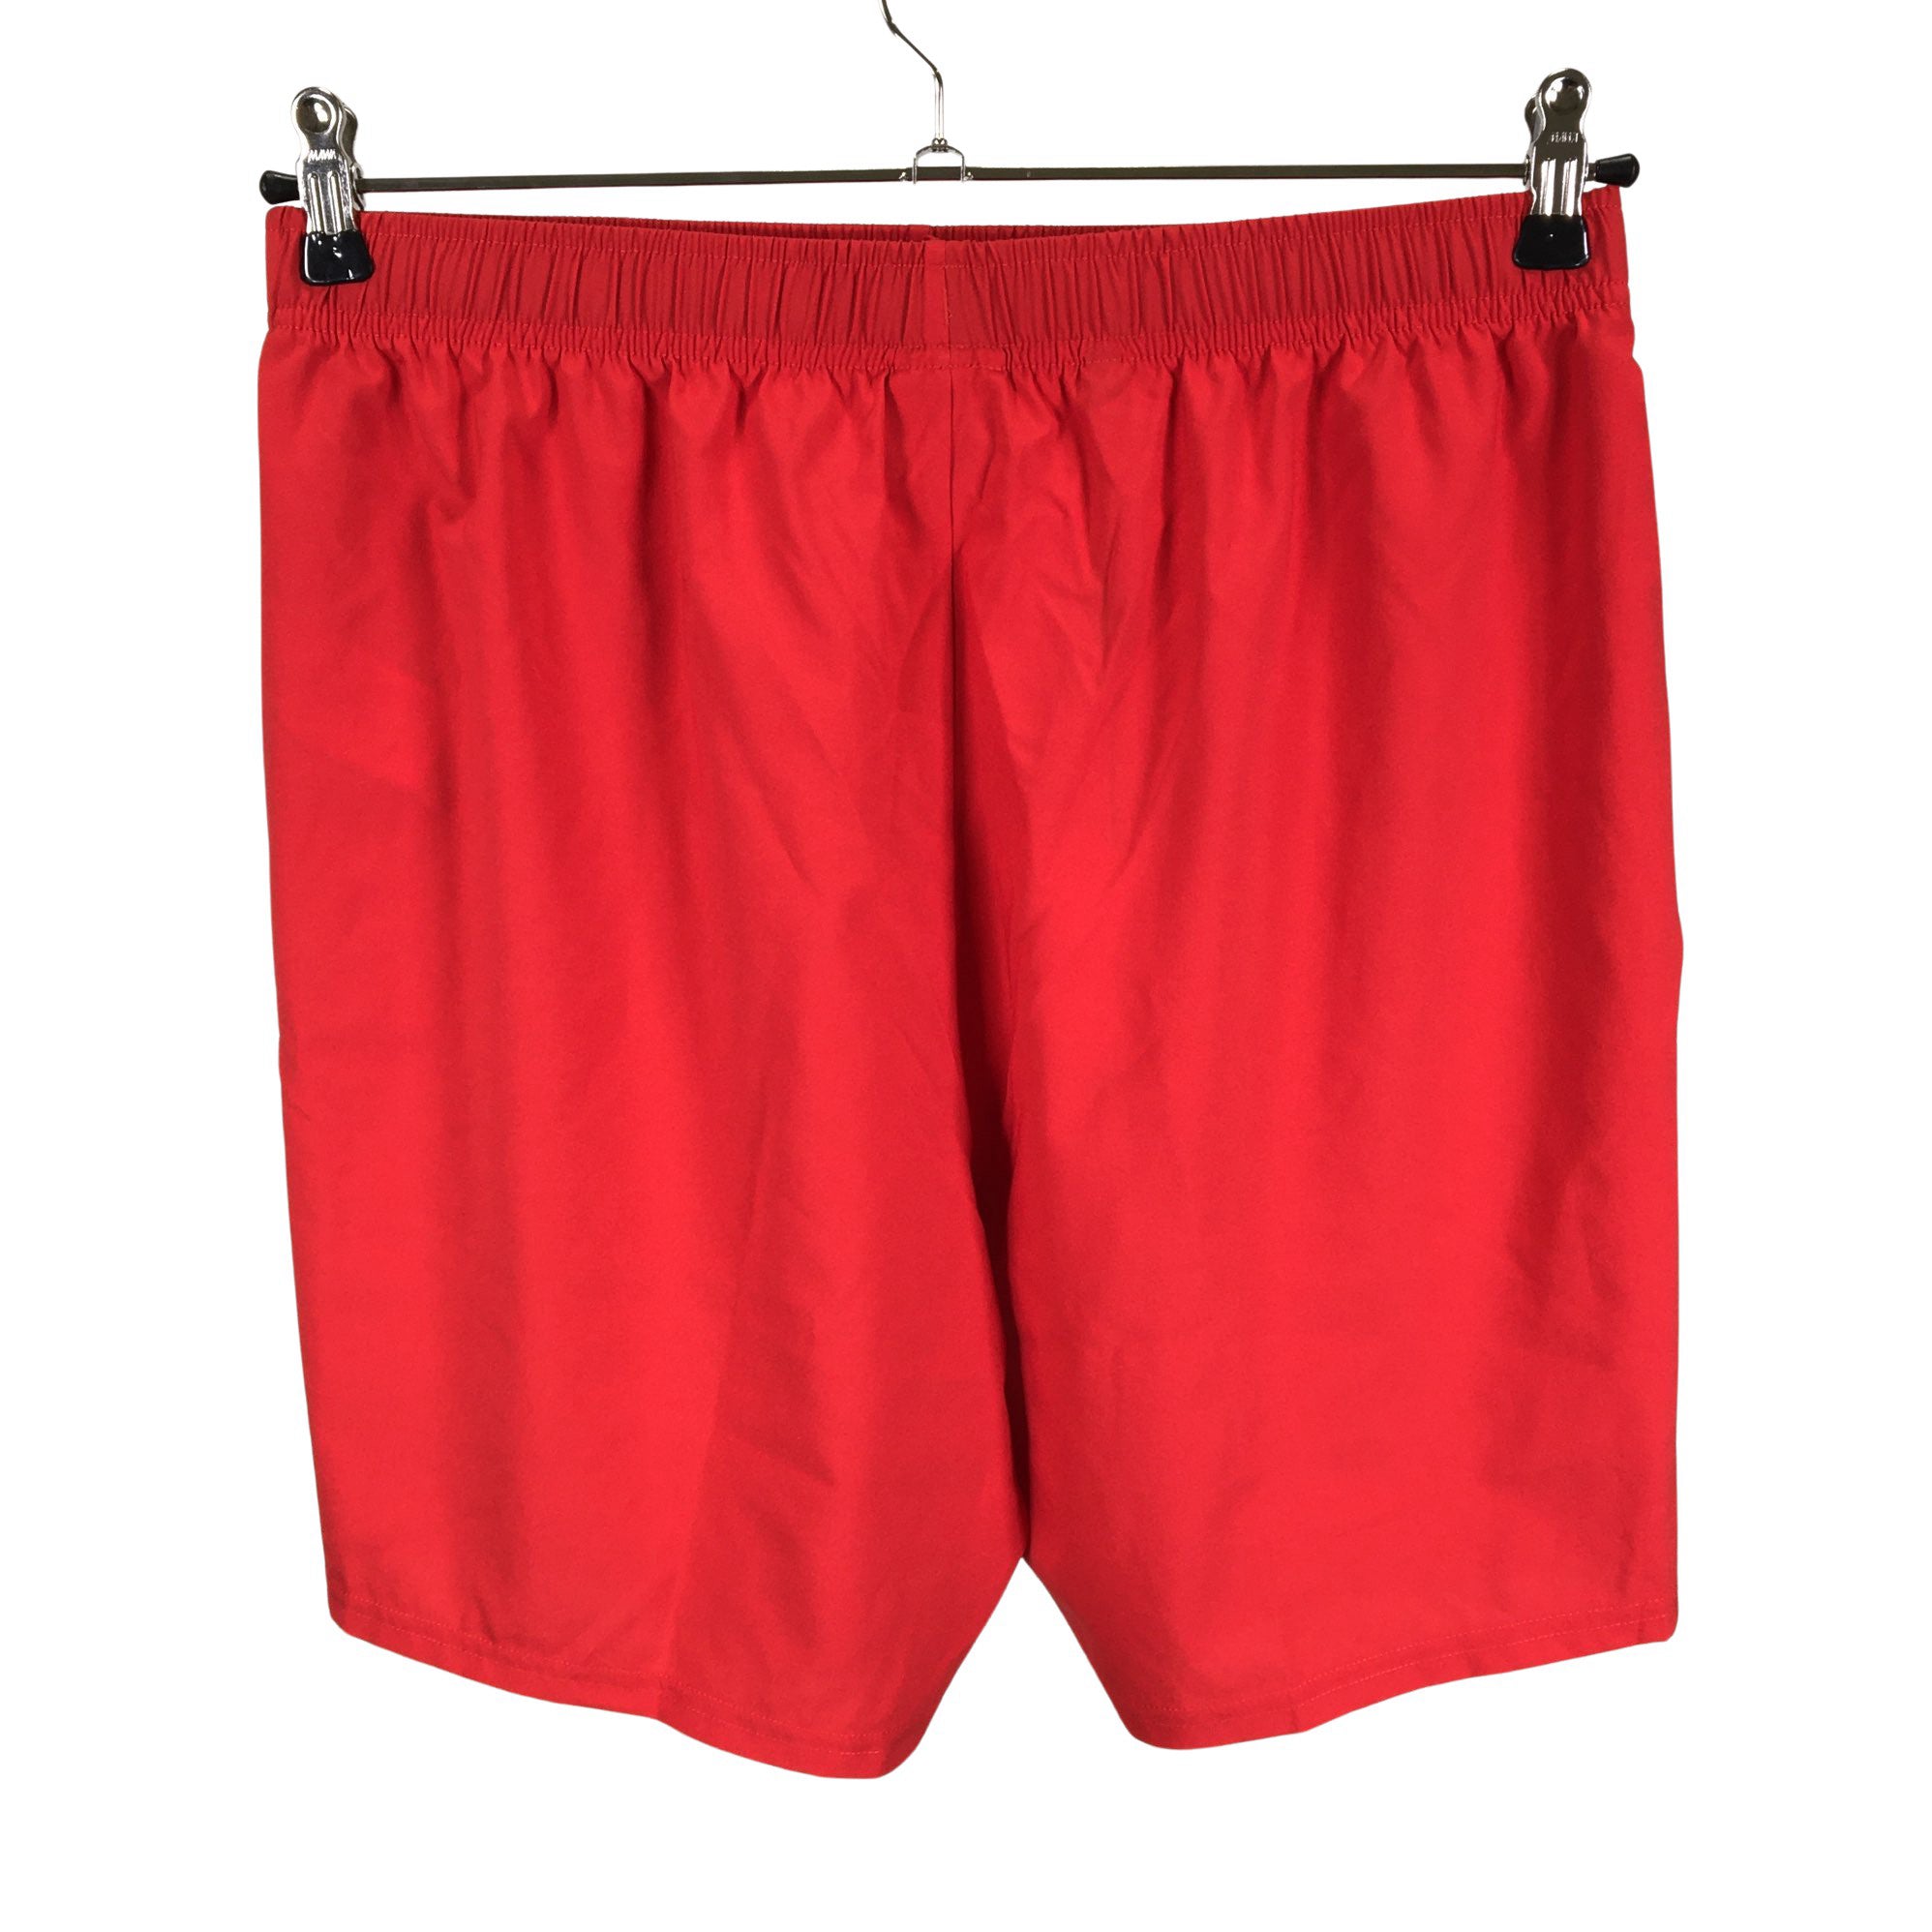 Men's Gymshark Sports shorts, size L (Red)